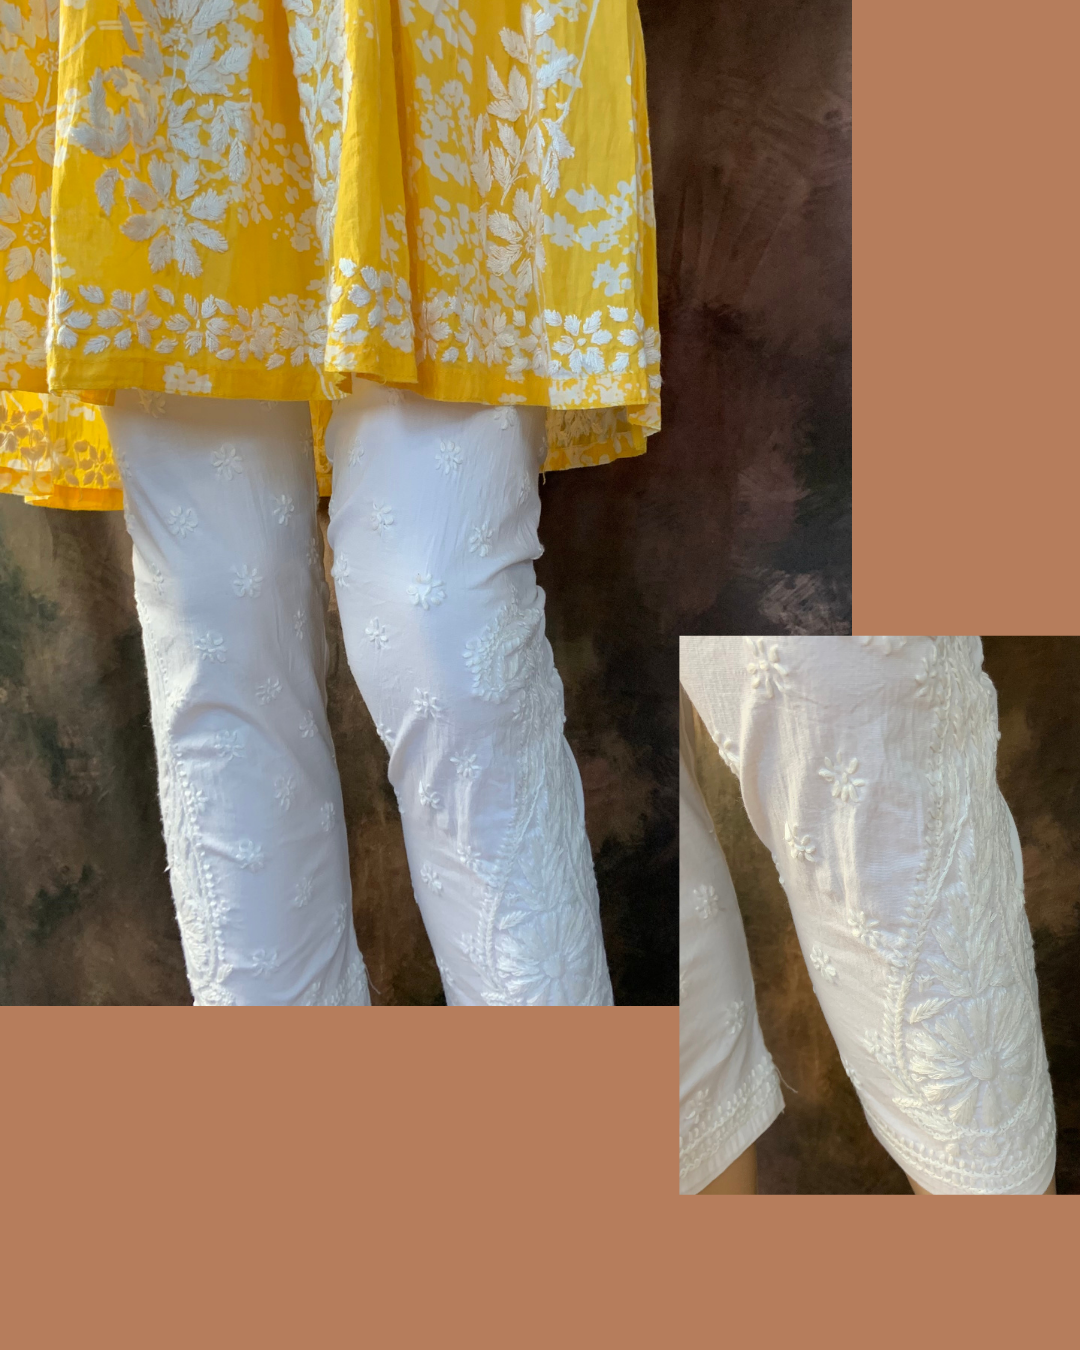 15 New Models of Churidar Pants for Ladies in Fashion | Fashion pants,  Stylish pants, Womens pants design